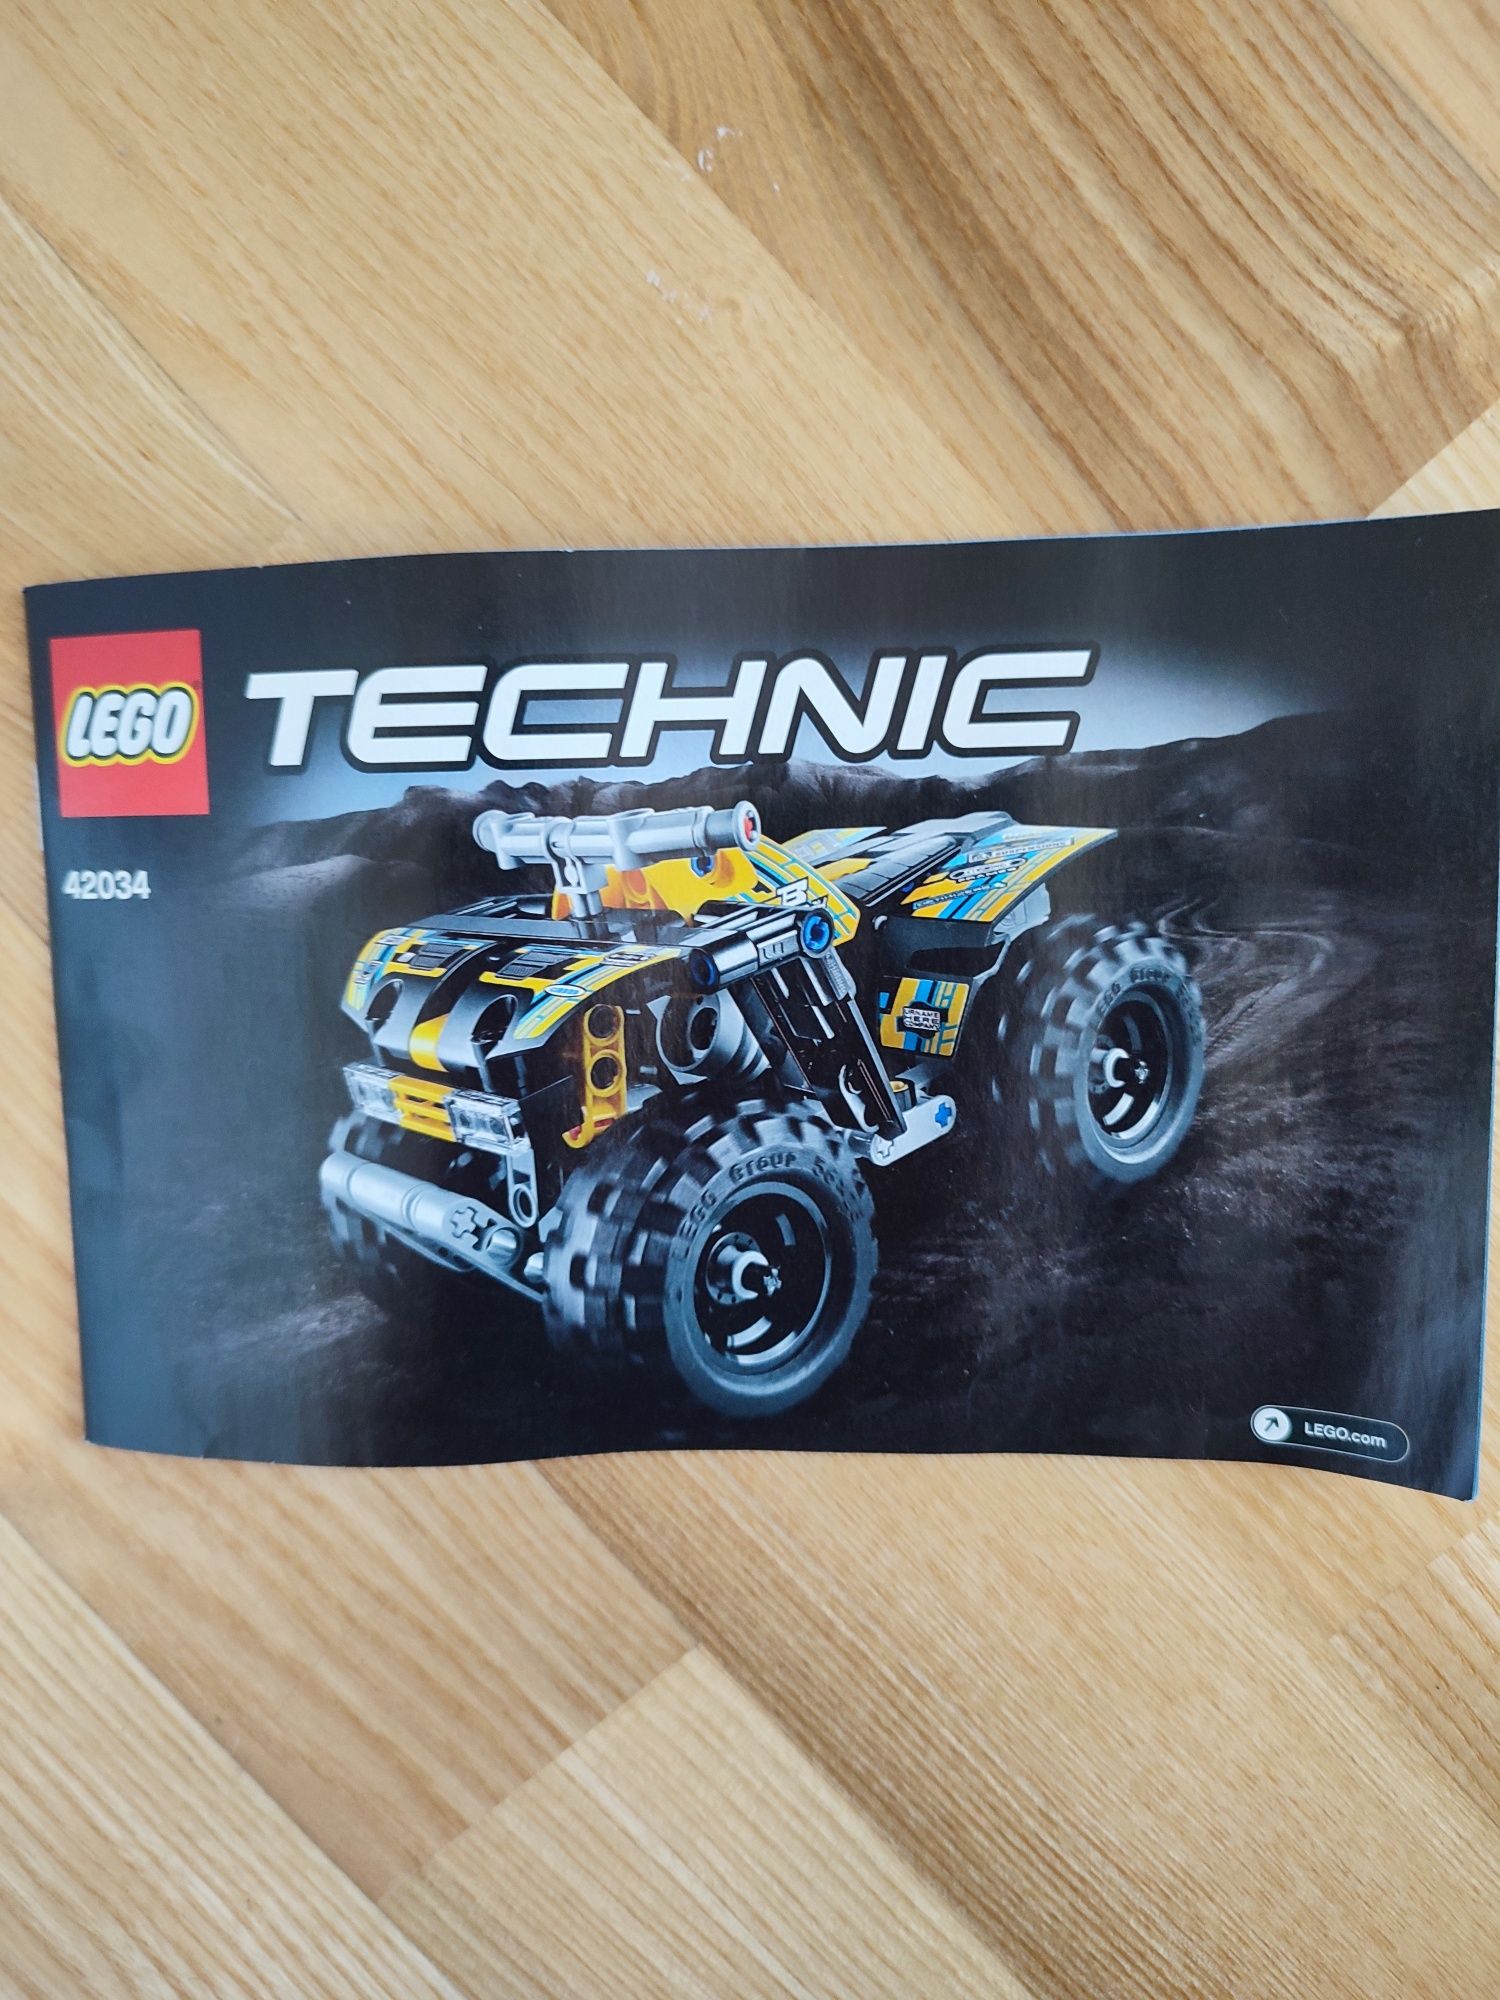 Zestaw LEGO technic 42034 Quad Pull Back